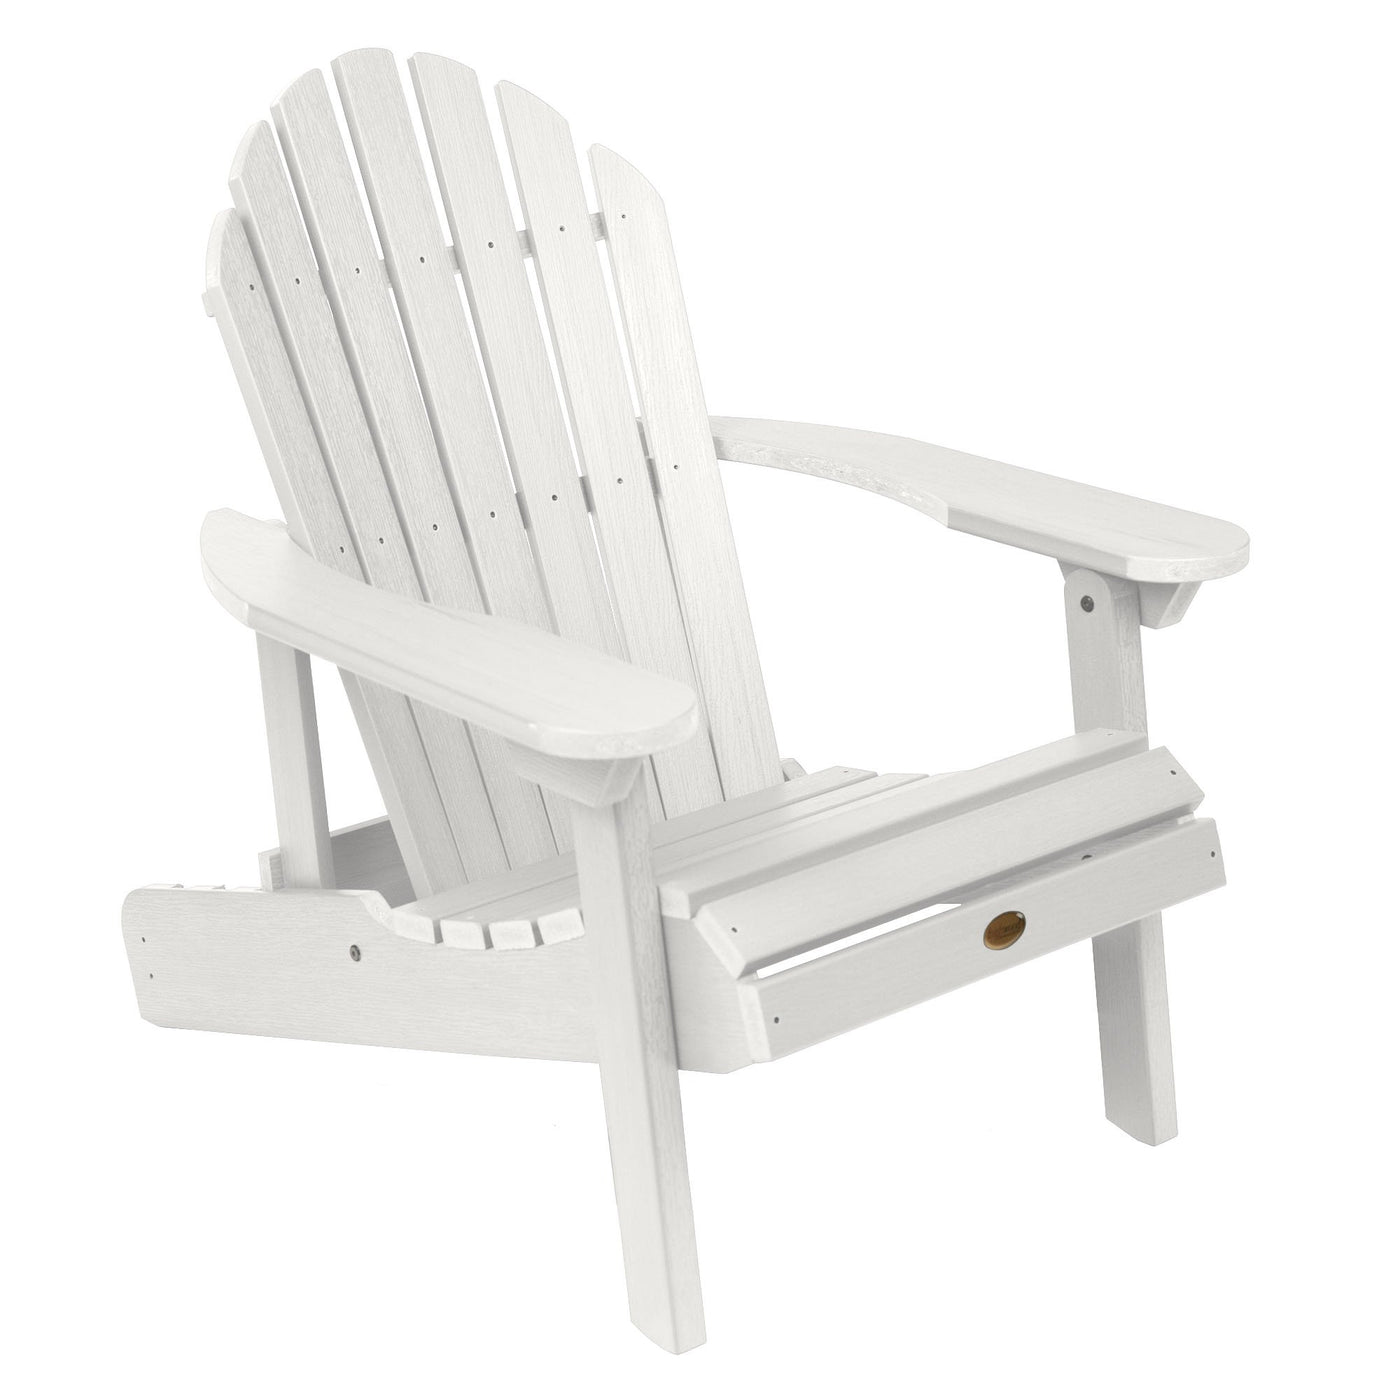 Hamilton Adirondack chair in White